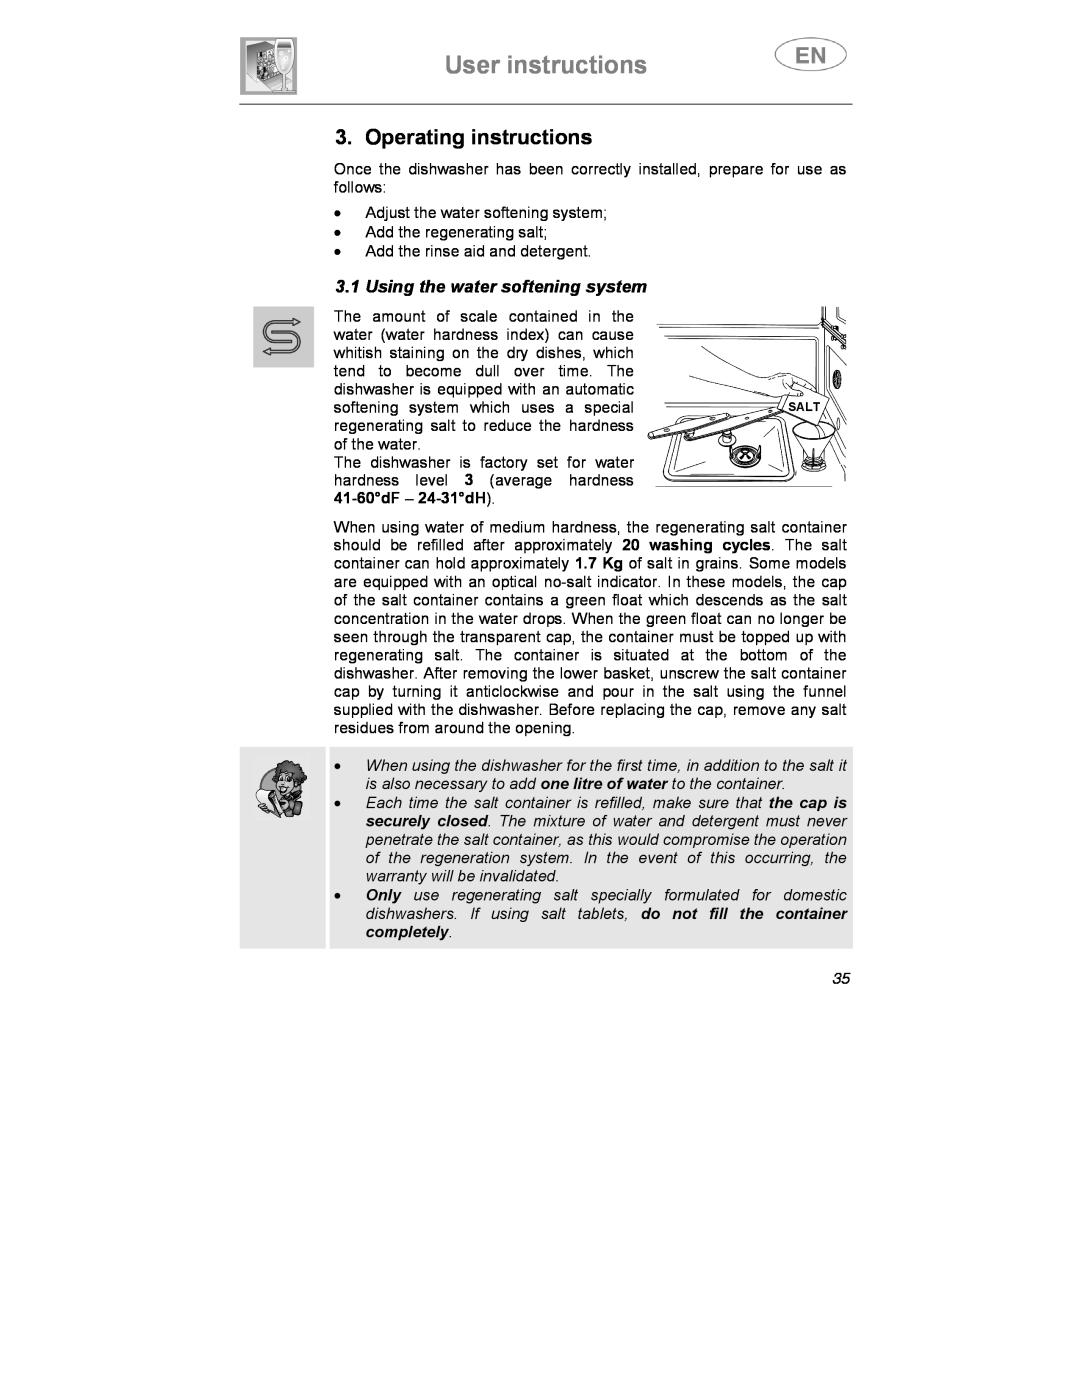 Smeg KLS1257B, KLS01-2 instruction manual User instructions, Operating instructions, Using the water softening system 